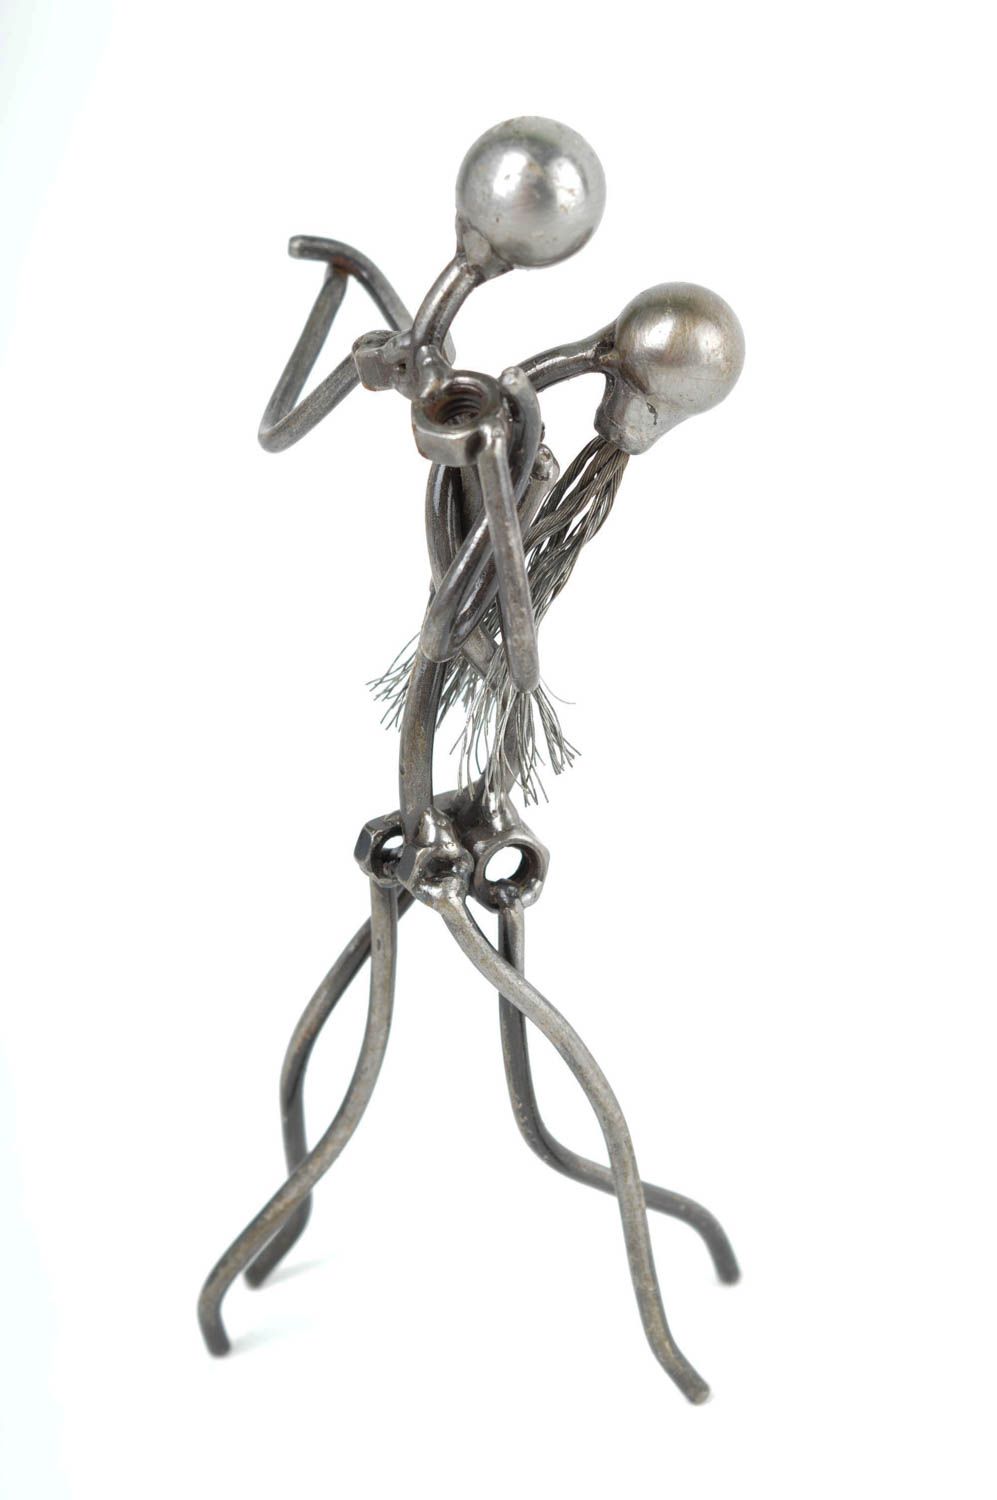 Unusual handmade figurine romantic metal figurine gift ideas decorative use only photo 5